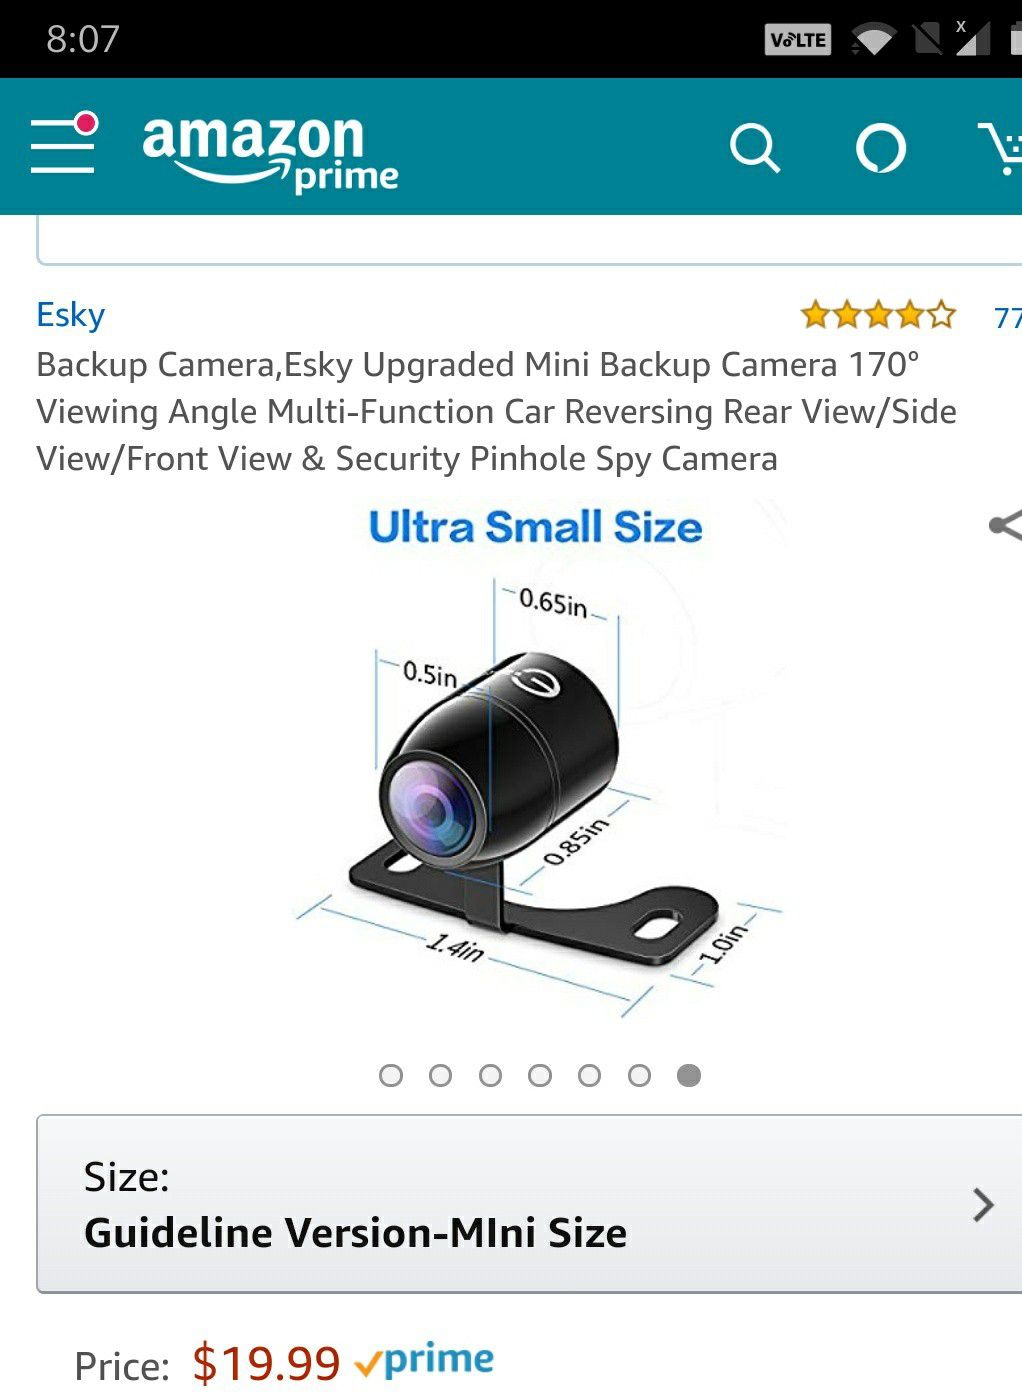 Brand new backup camera